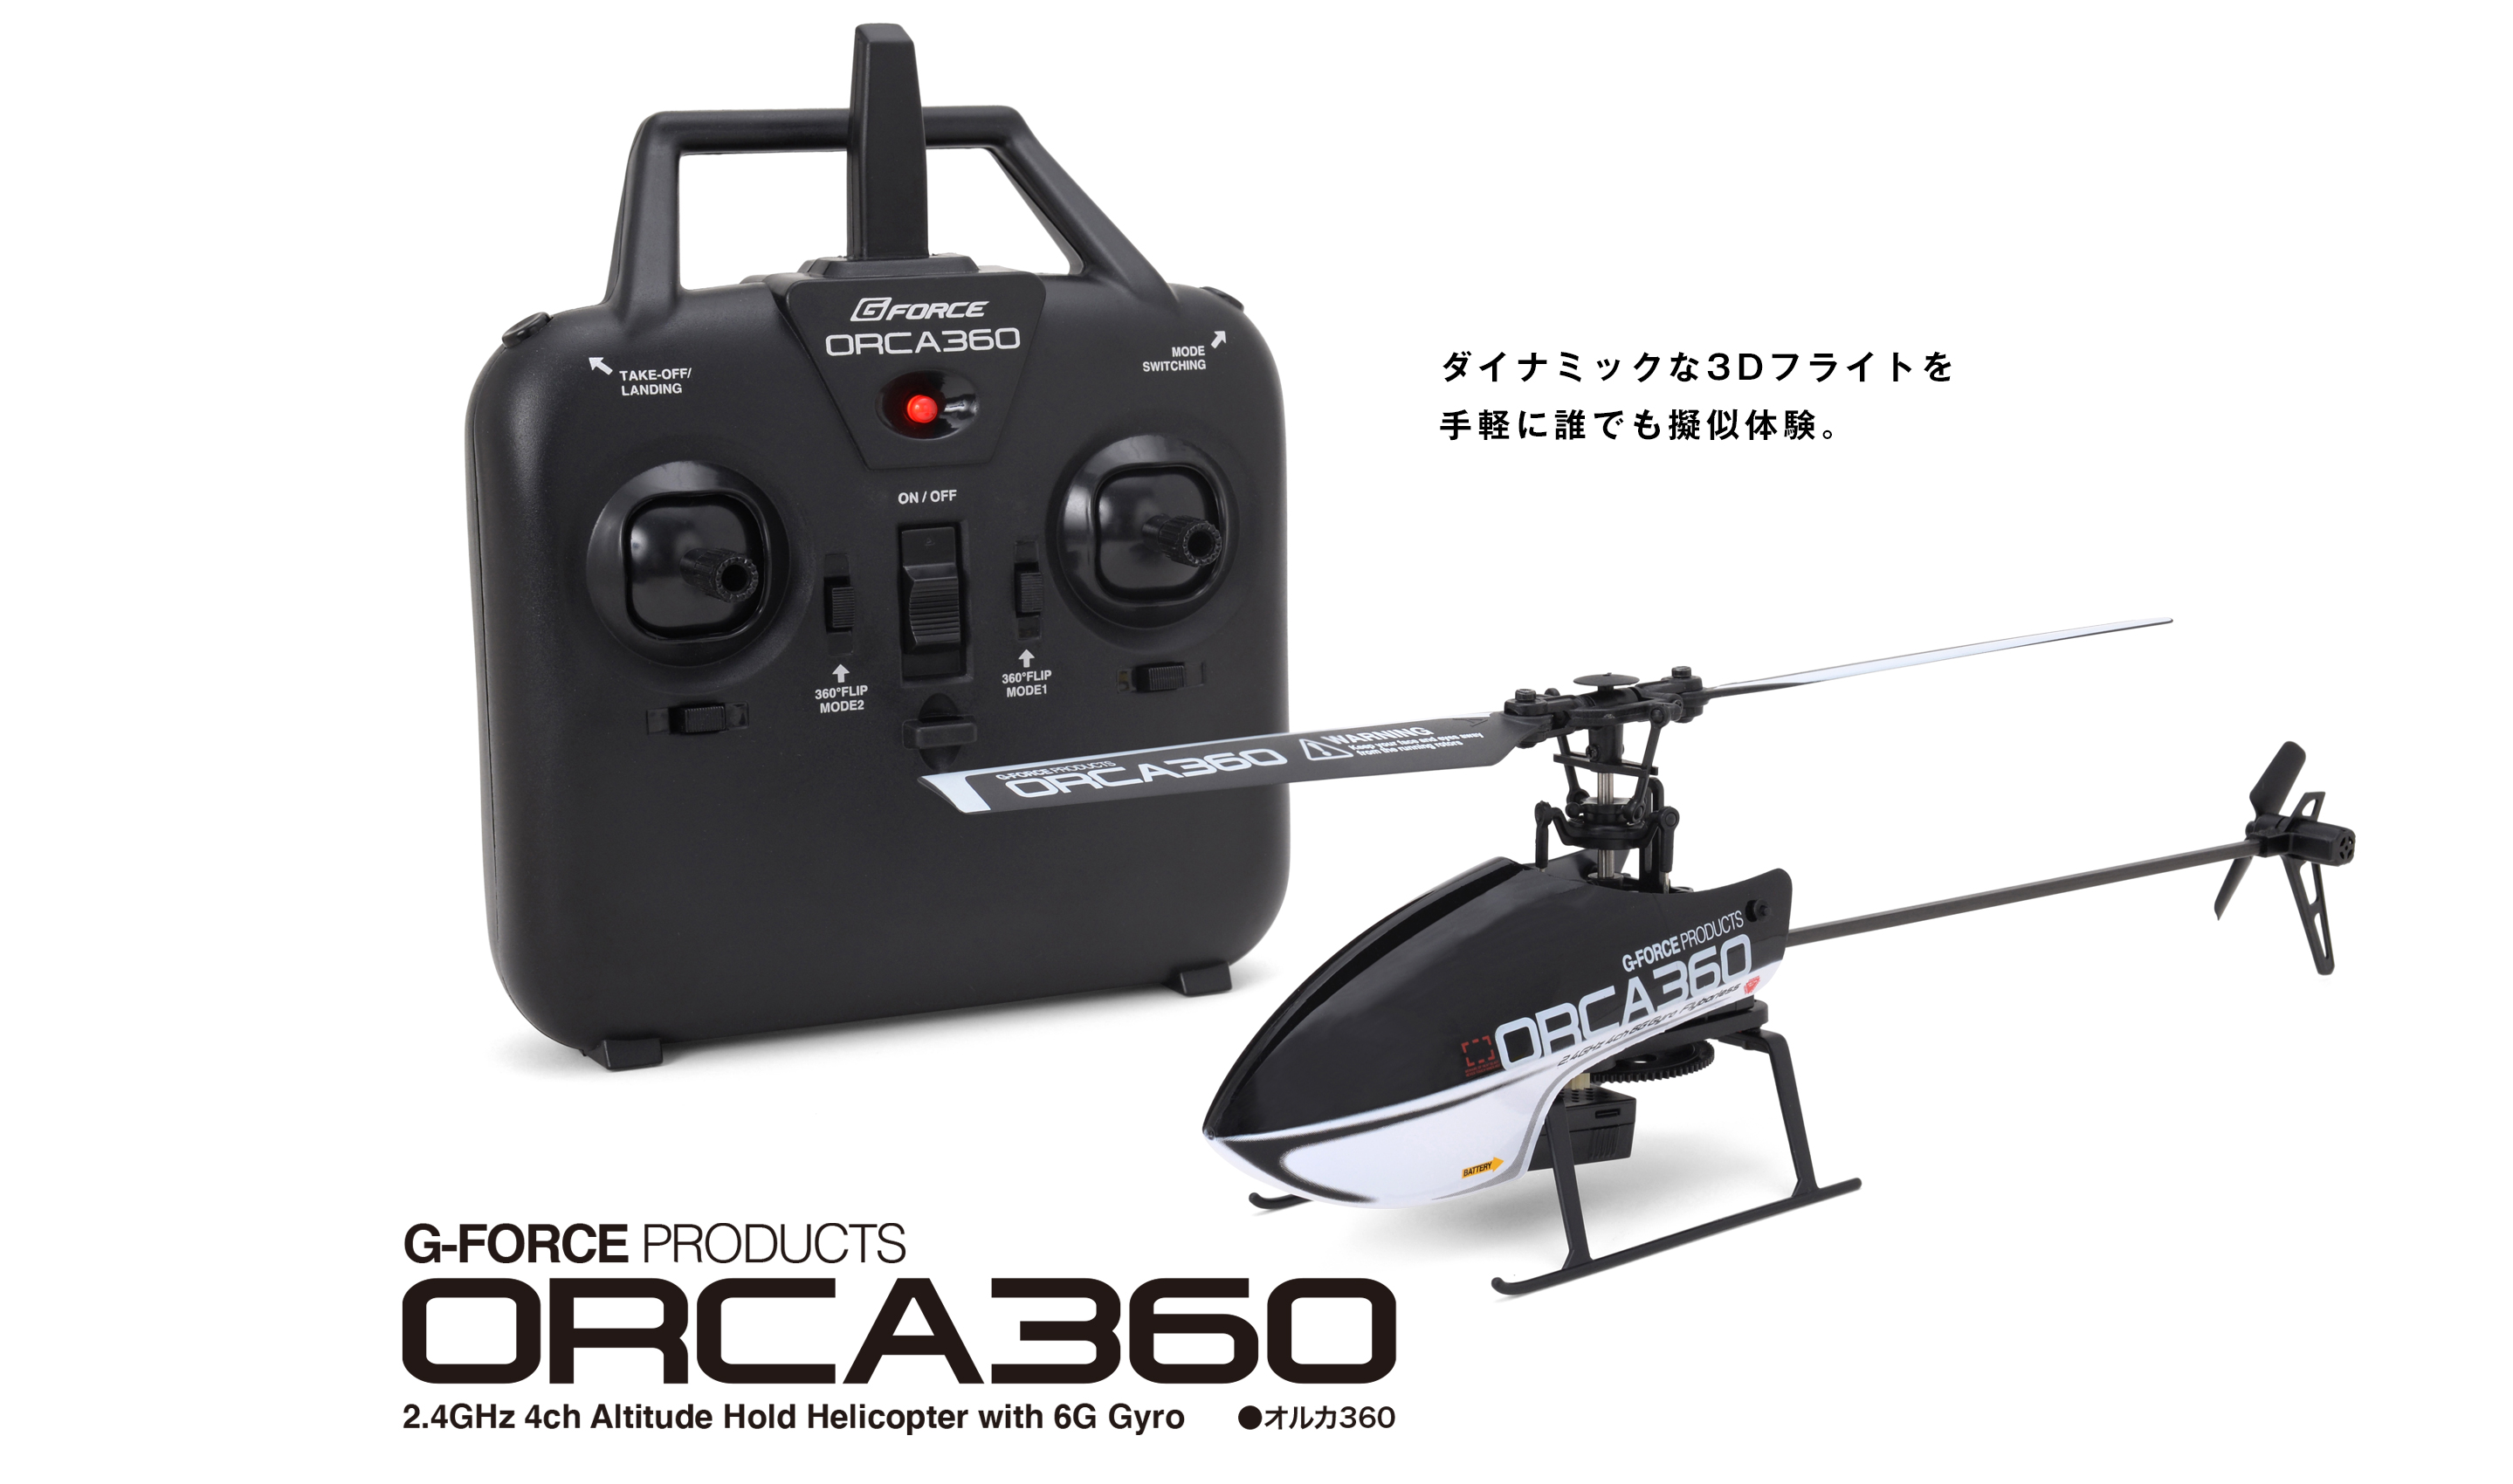 G-FORCE 2.4GHz 4chヘリコプター ORCA360 オルカ360 RTFセット (GB022) 100g未満